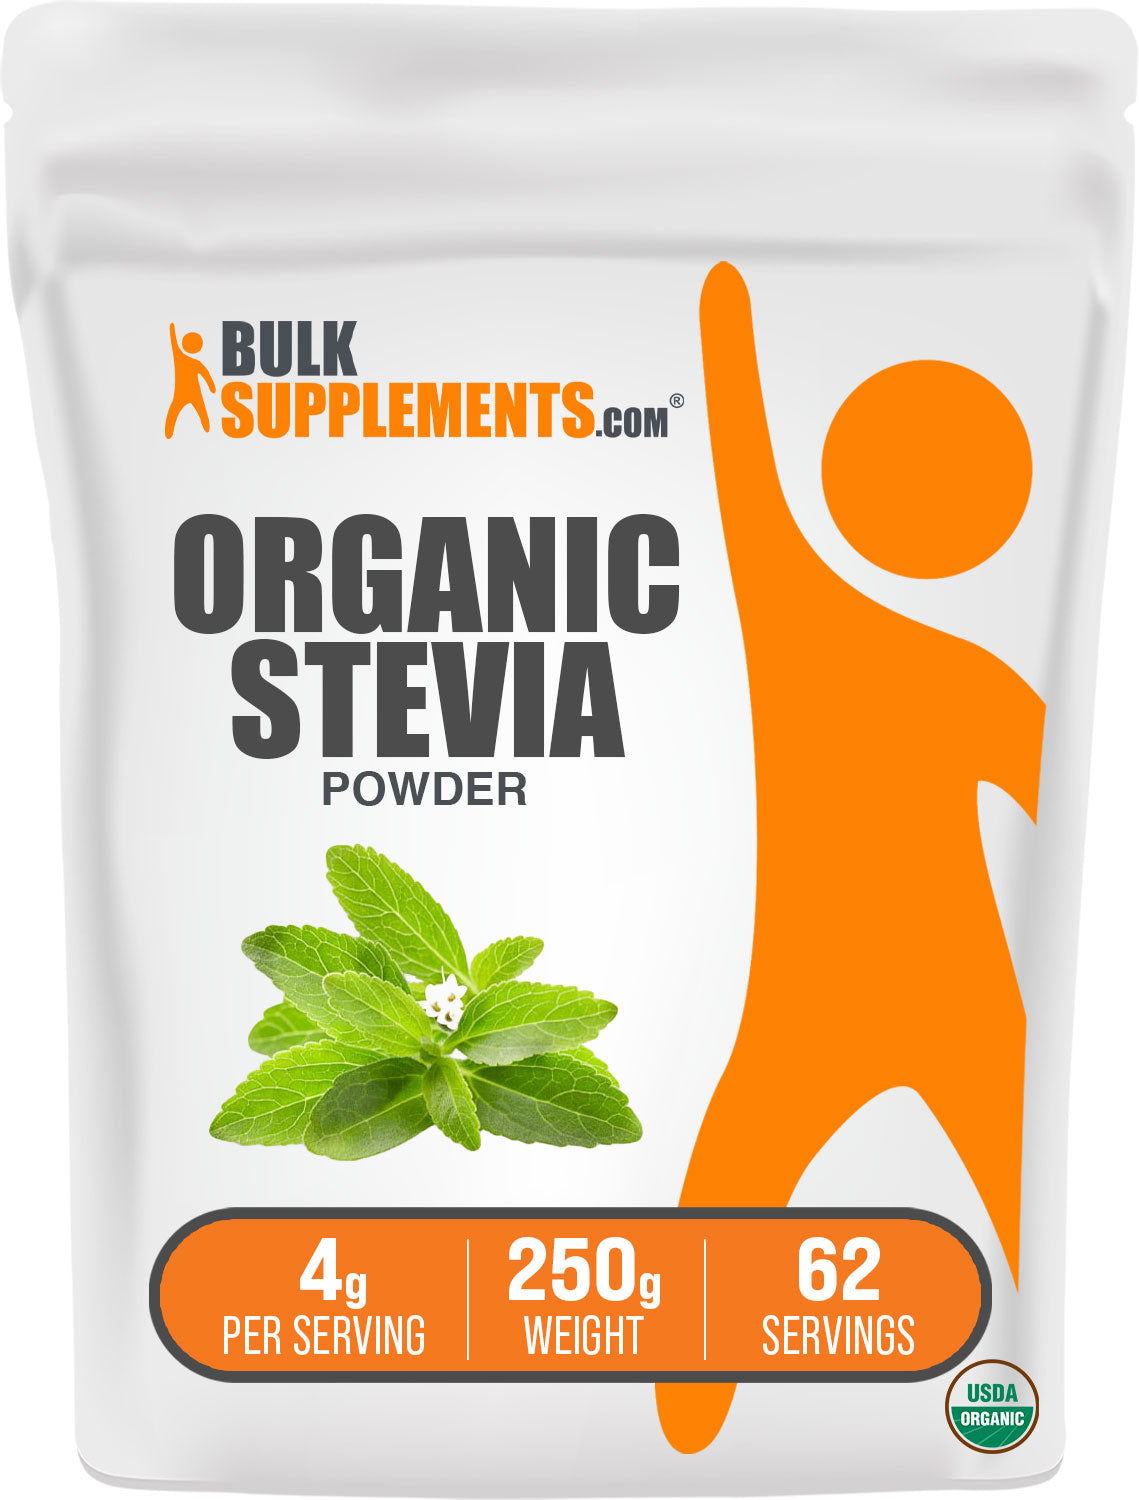 BulkSupplements.com Organic Stevia Powder 250g bag